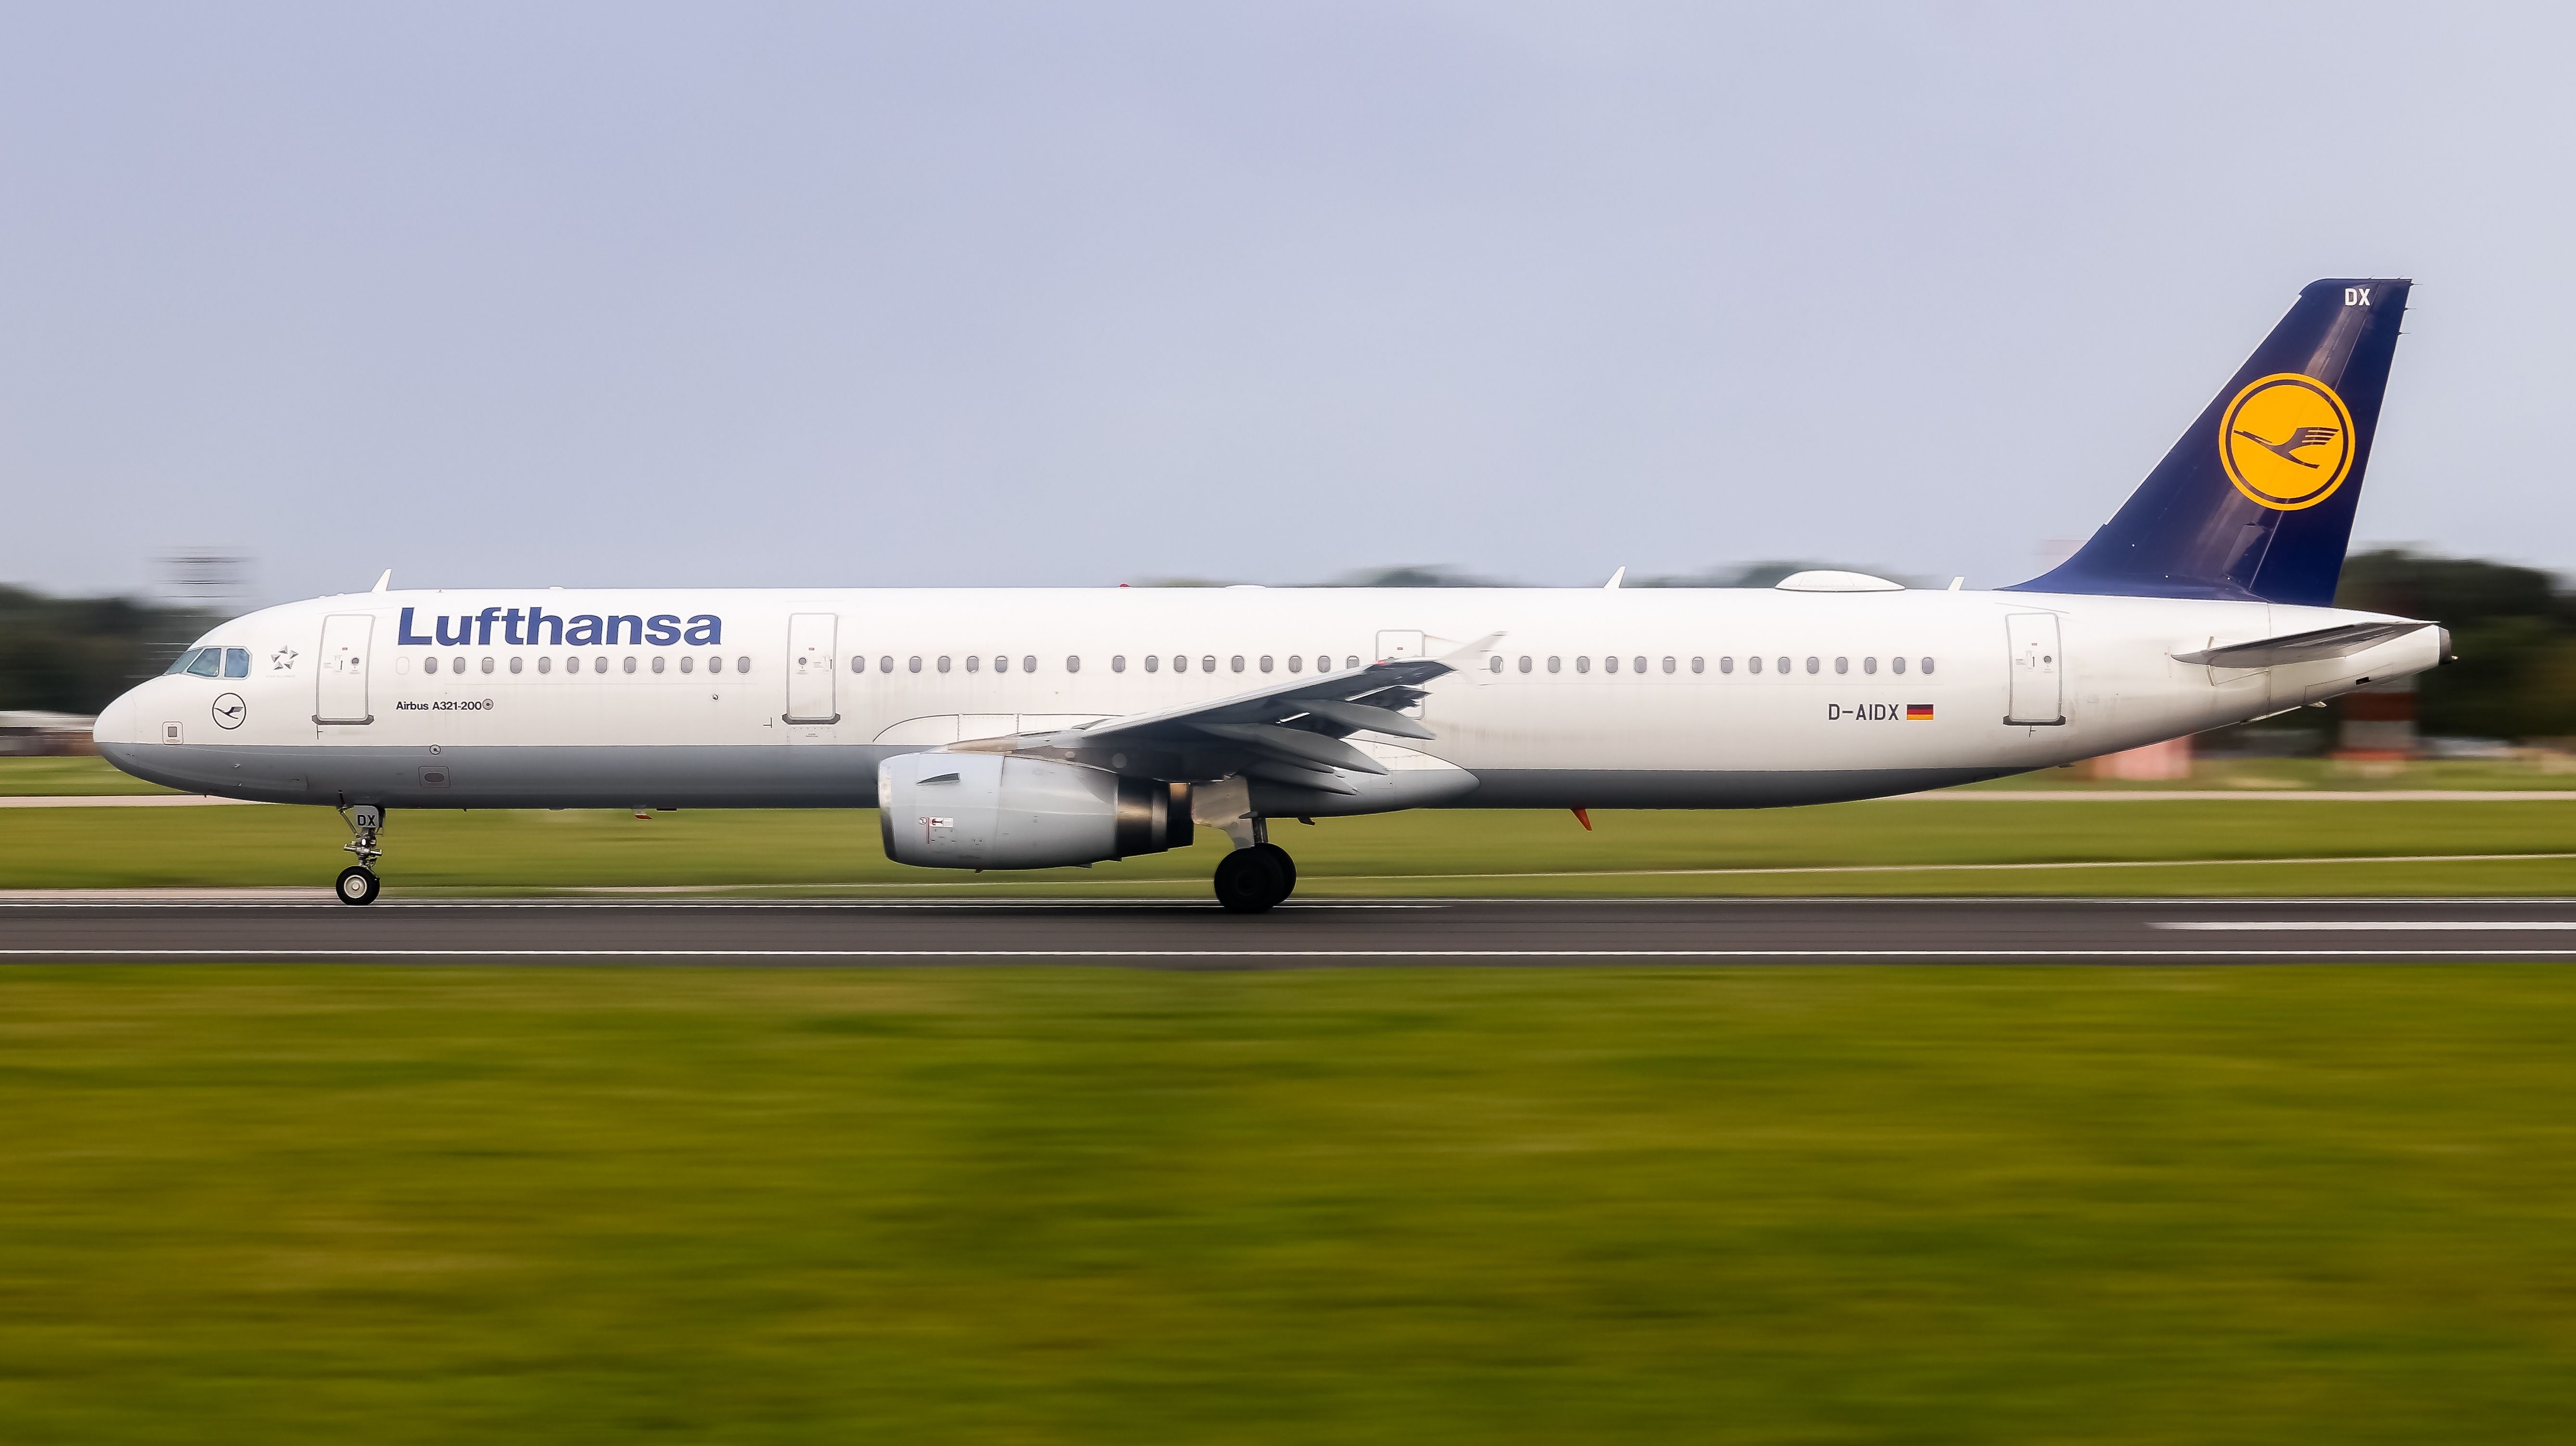 A Lufthansa A321 on a runway.